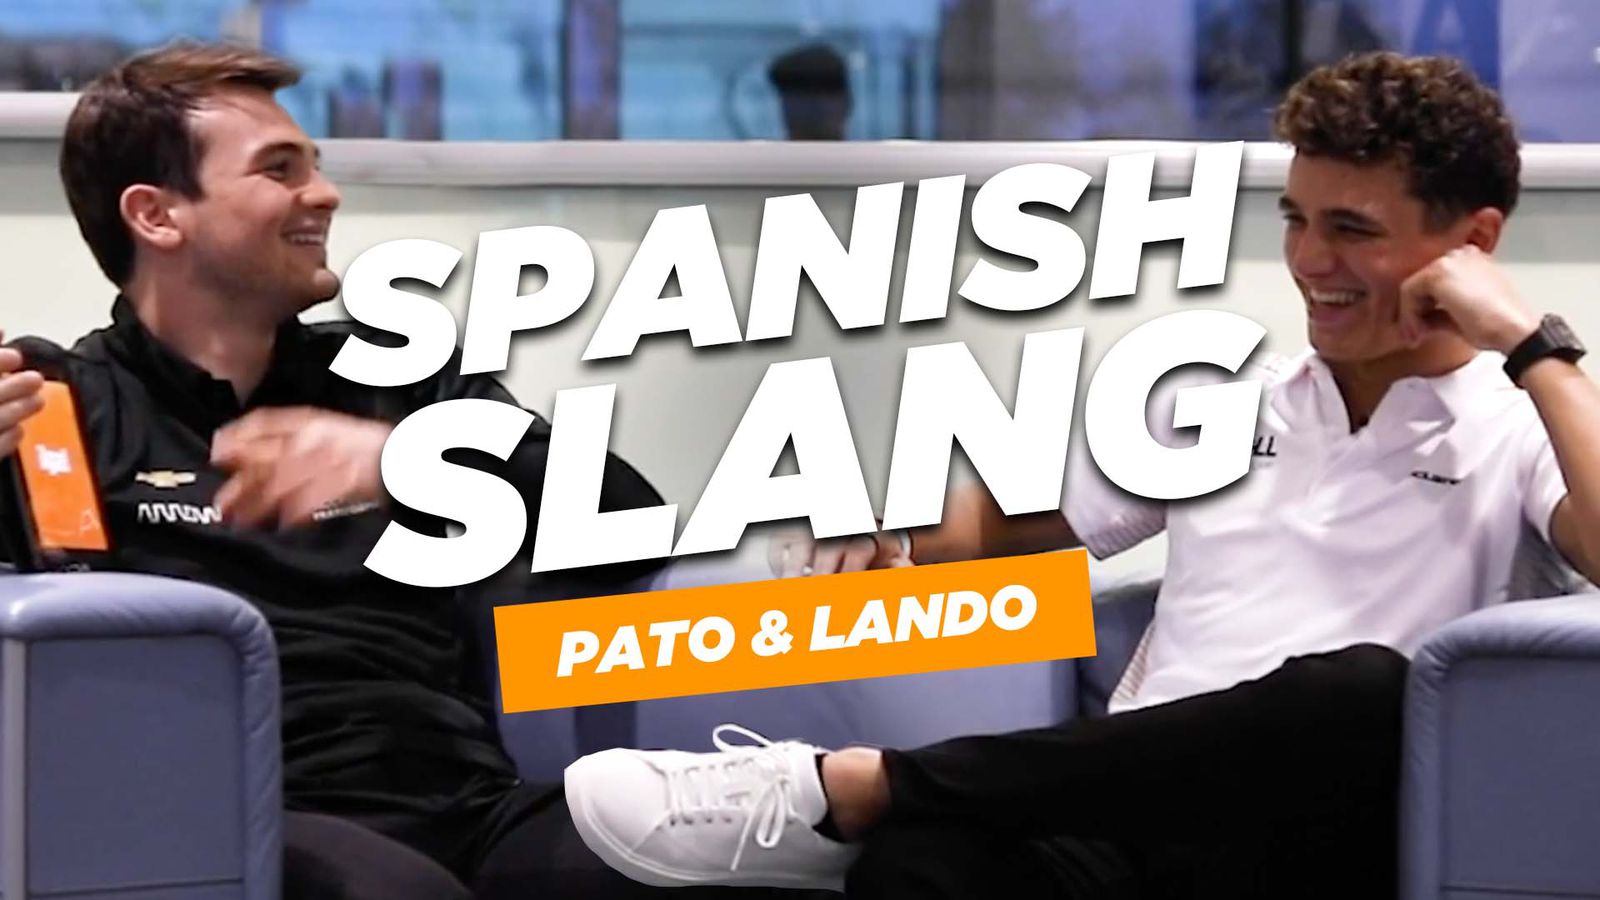 Spanish slang